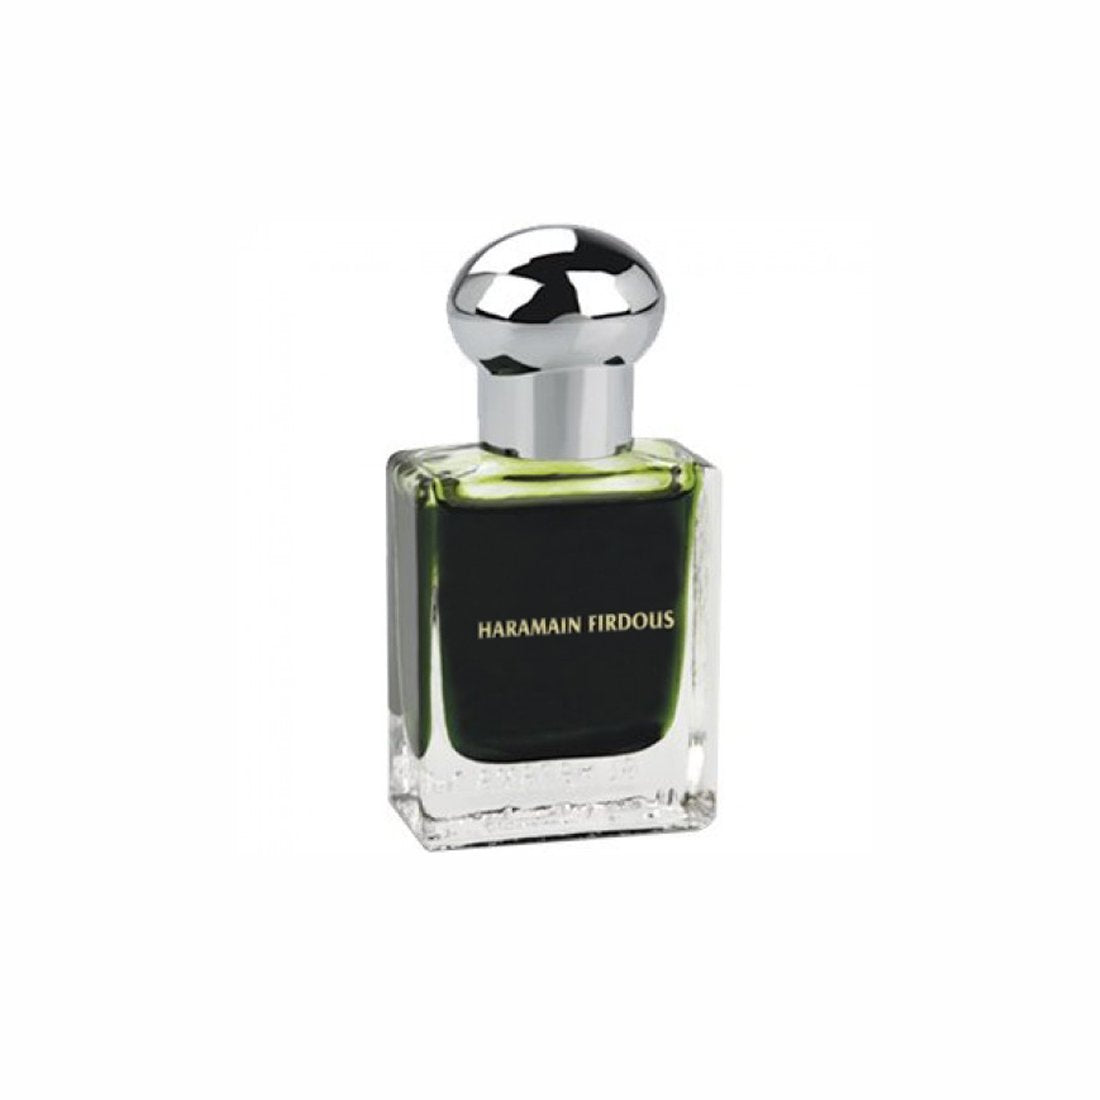 Al Haramain Firdous & Forever Fragrance Pure Original Roll on Perfume Oil Pack of 2 (Attar) - 2 x 15 ml